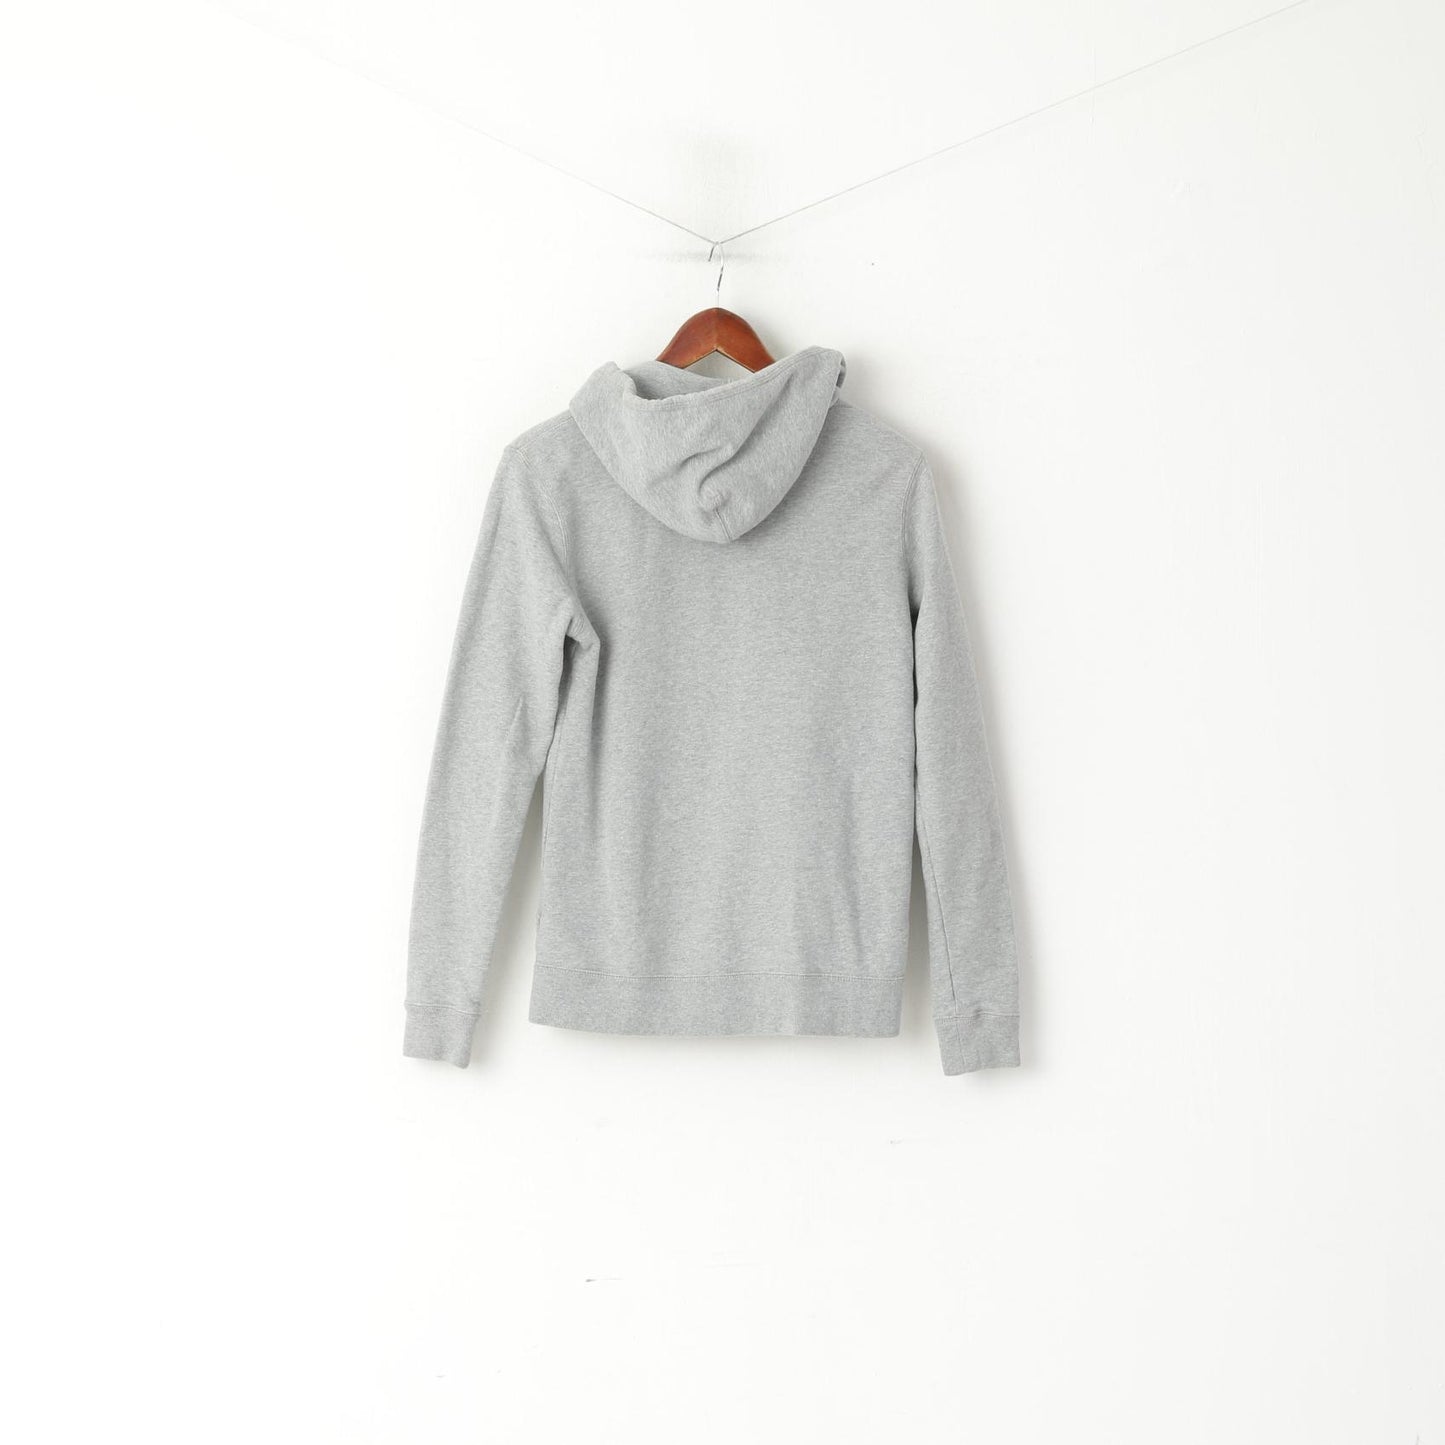 Nike Women L Sweatshirt Grey Cotton Full Zipper Hooded Activewear Top